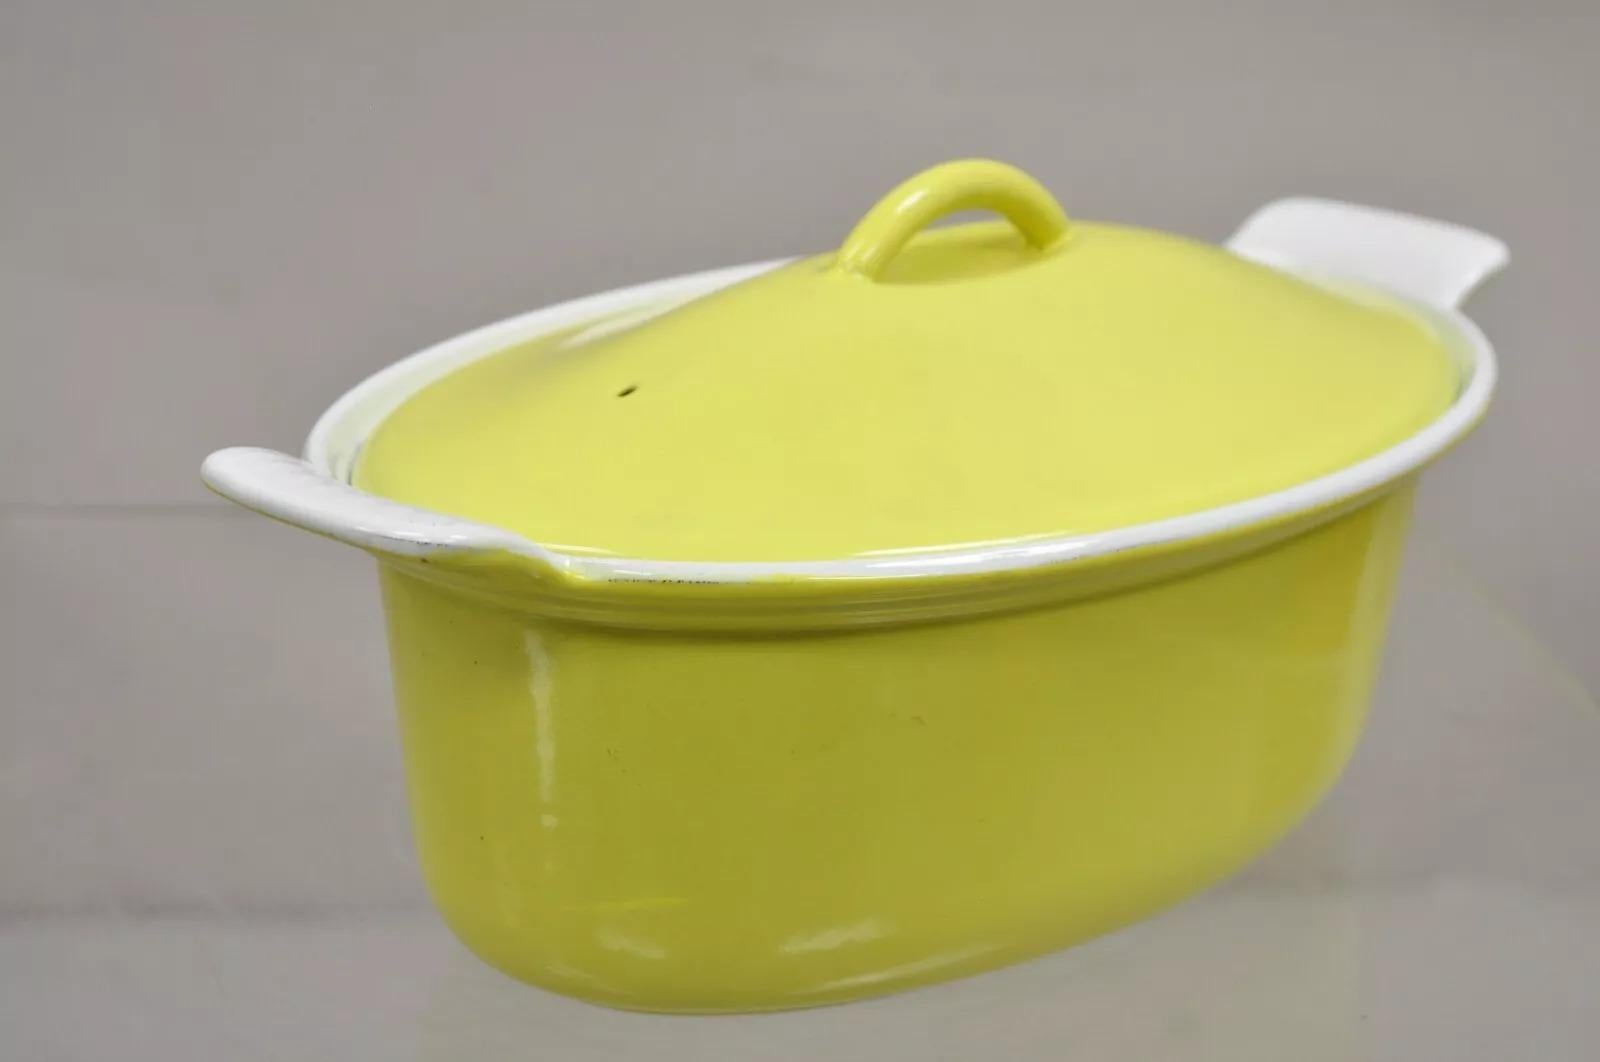 Vintage Descoware Belgium Yellow Cast Iron Enamel Oval Lidded Casserole Pot. Circa Mid 20th Century. Measurements: 5